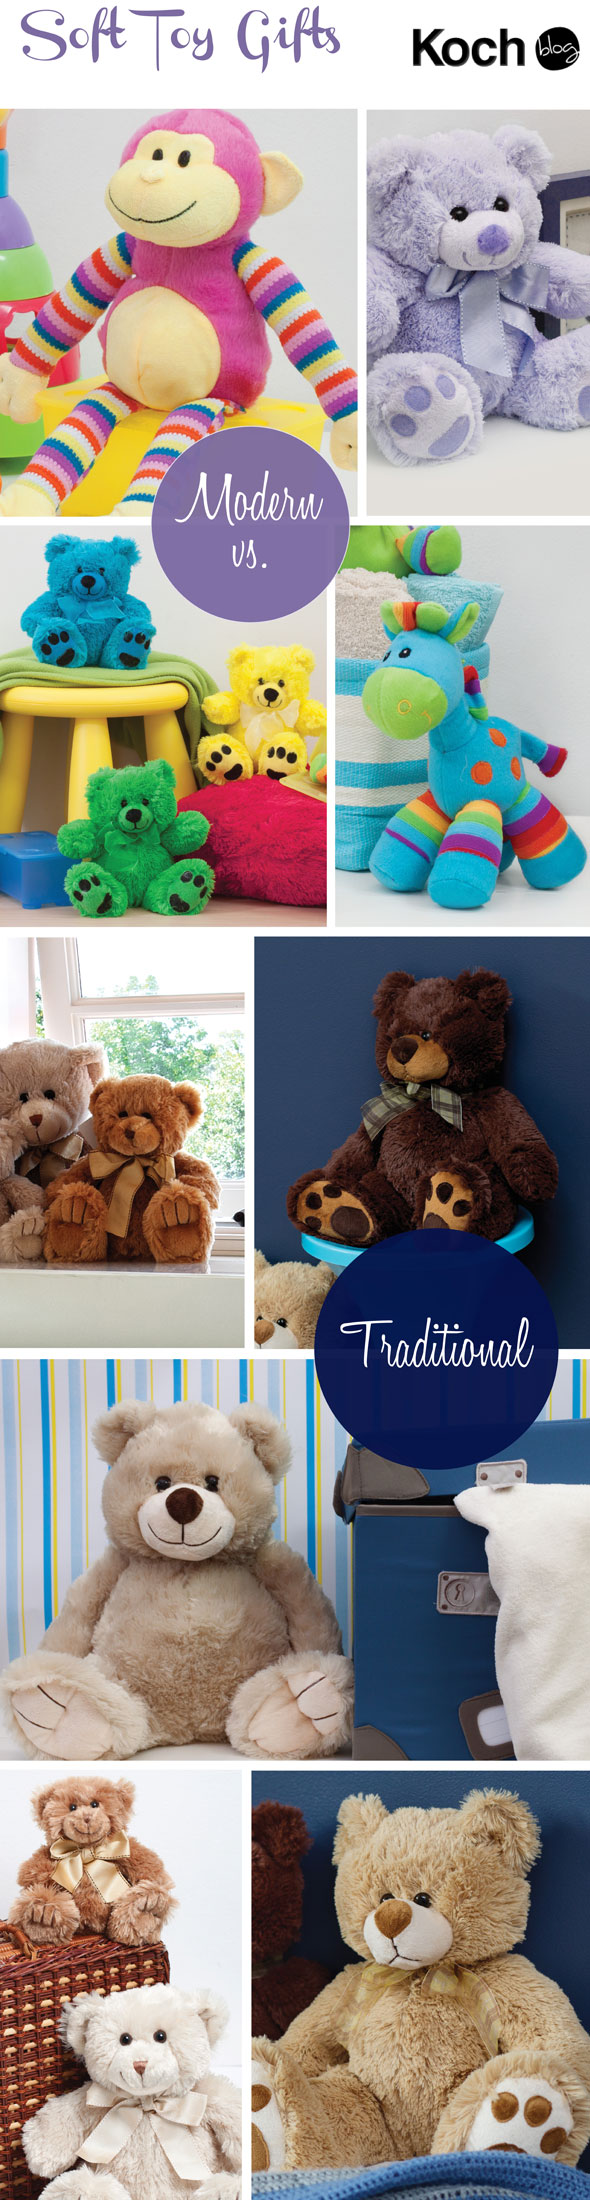 Teddy Bears For Sale Modern vs Traditional